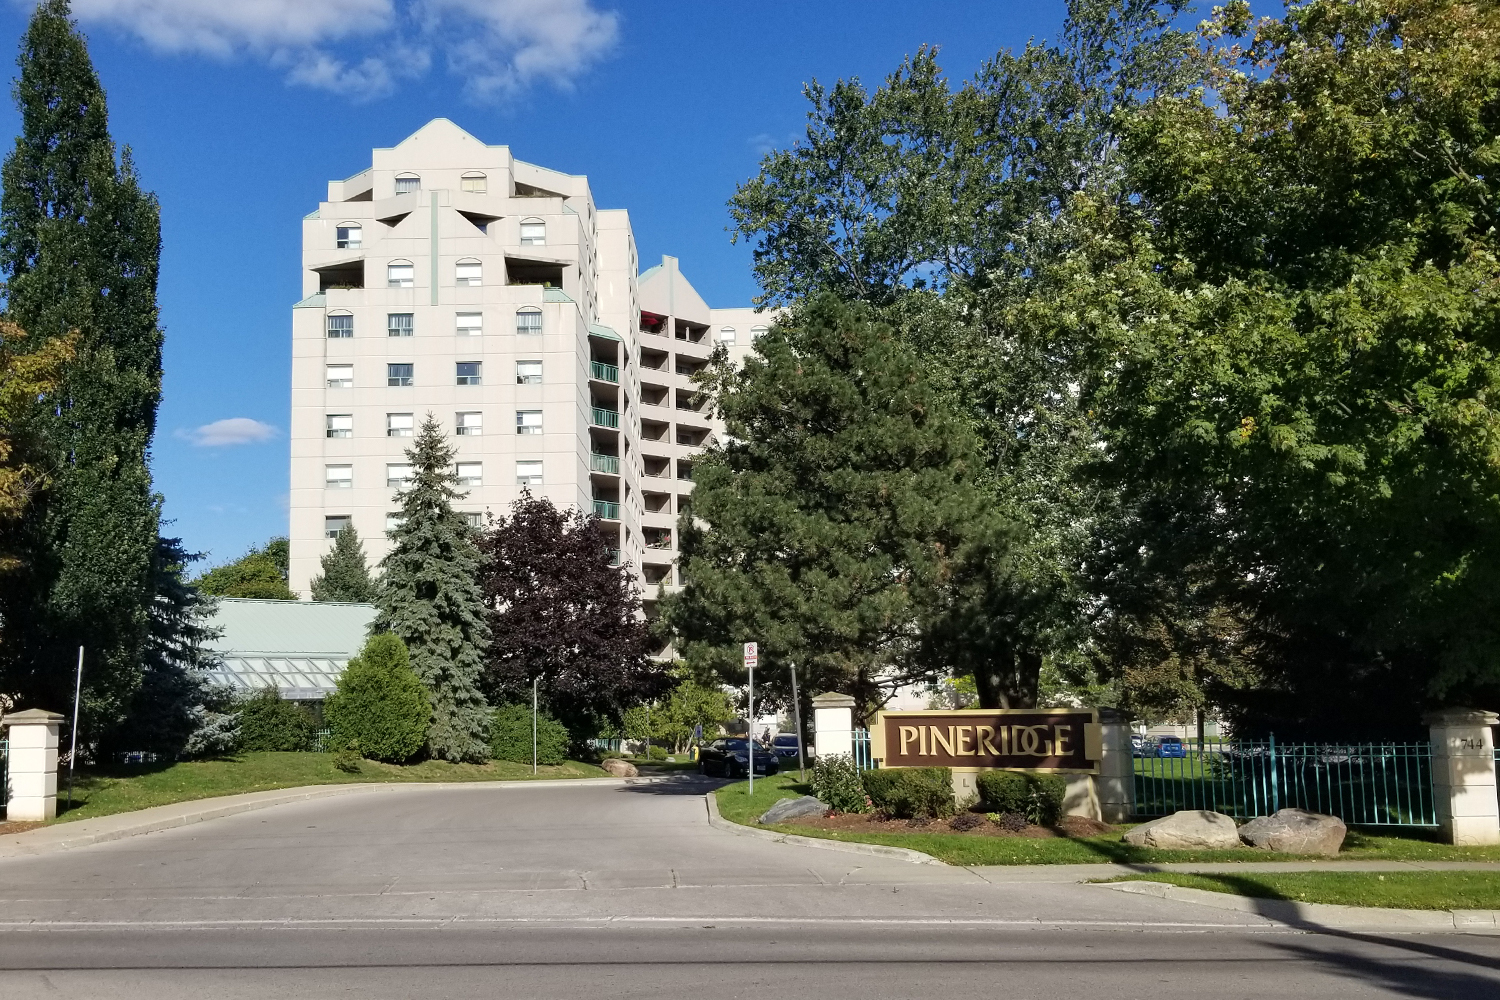 Pineridge Place apartments in London, Ontario